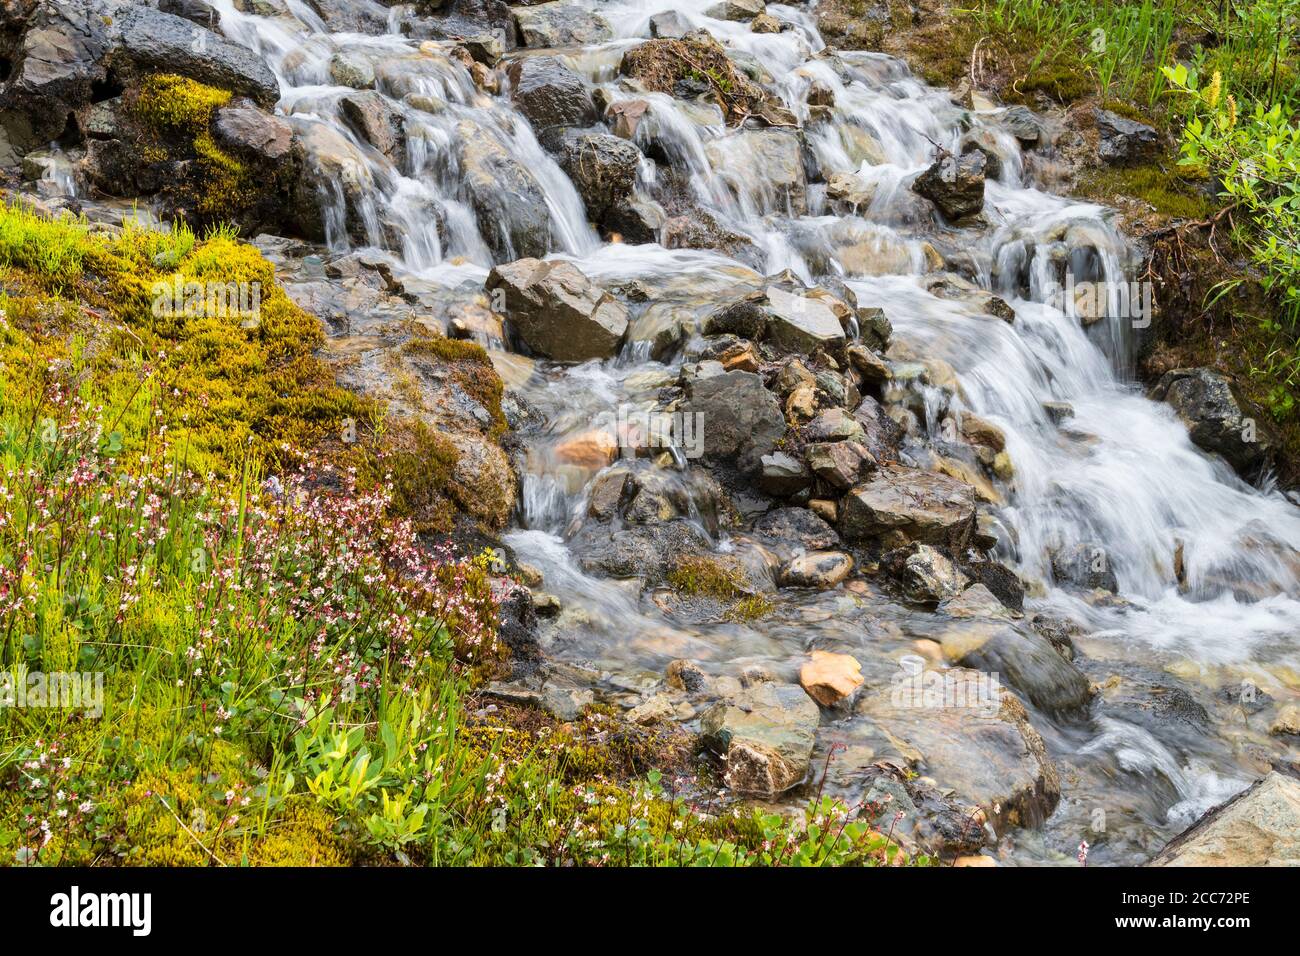 North America; United States; Denali National Park; Alaska Range Mountains; Alpine Stream, Autumn Colors; Red-stemmed Saxifraga; Saxifraga lyallii Stock Photo